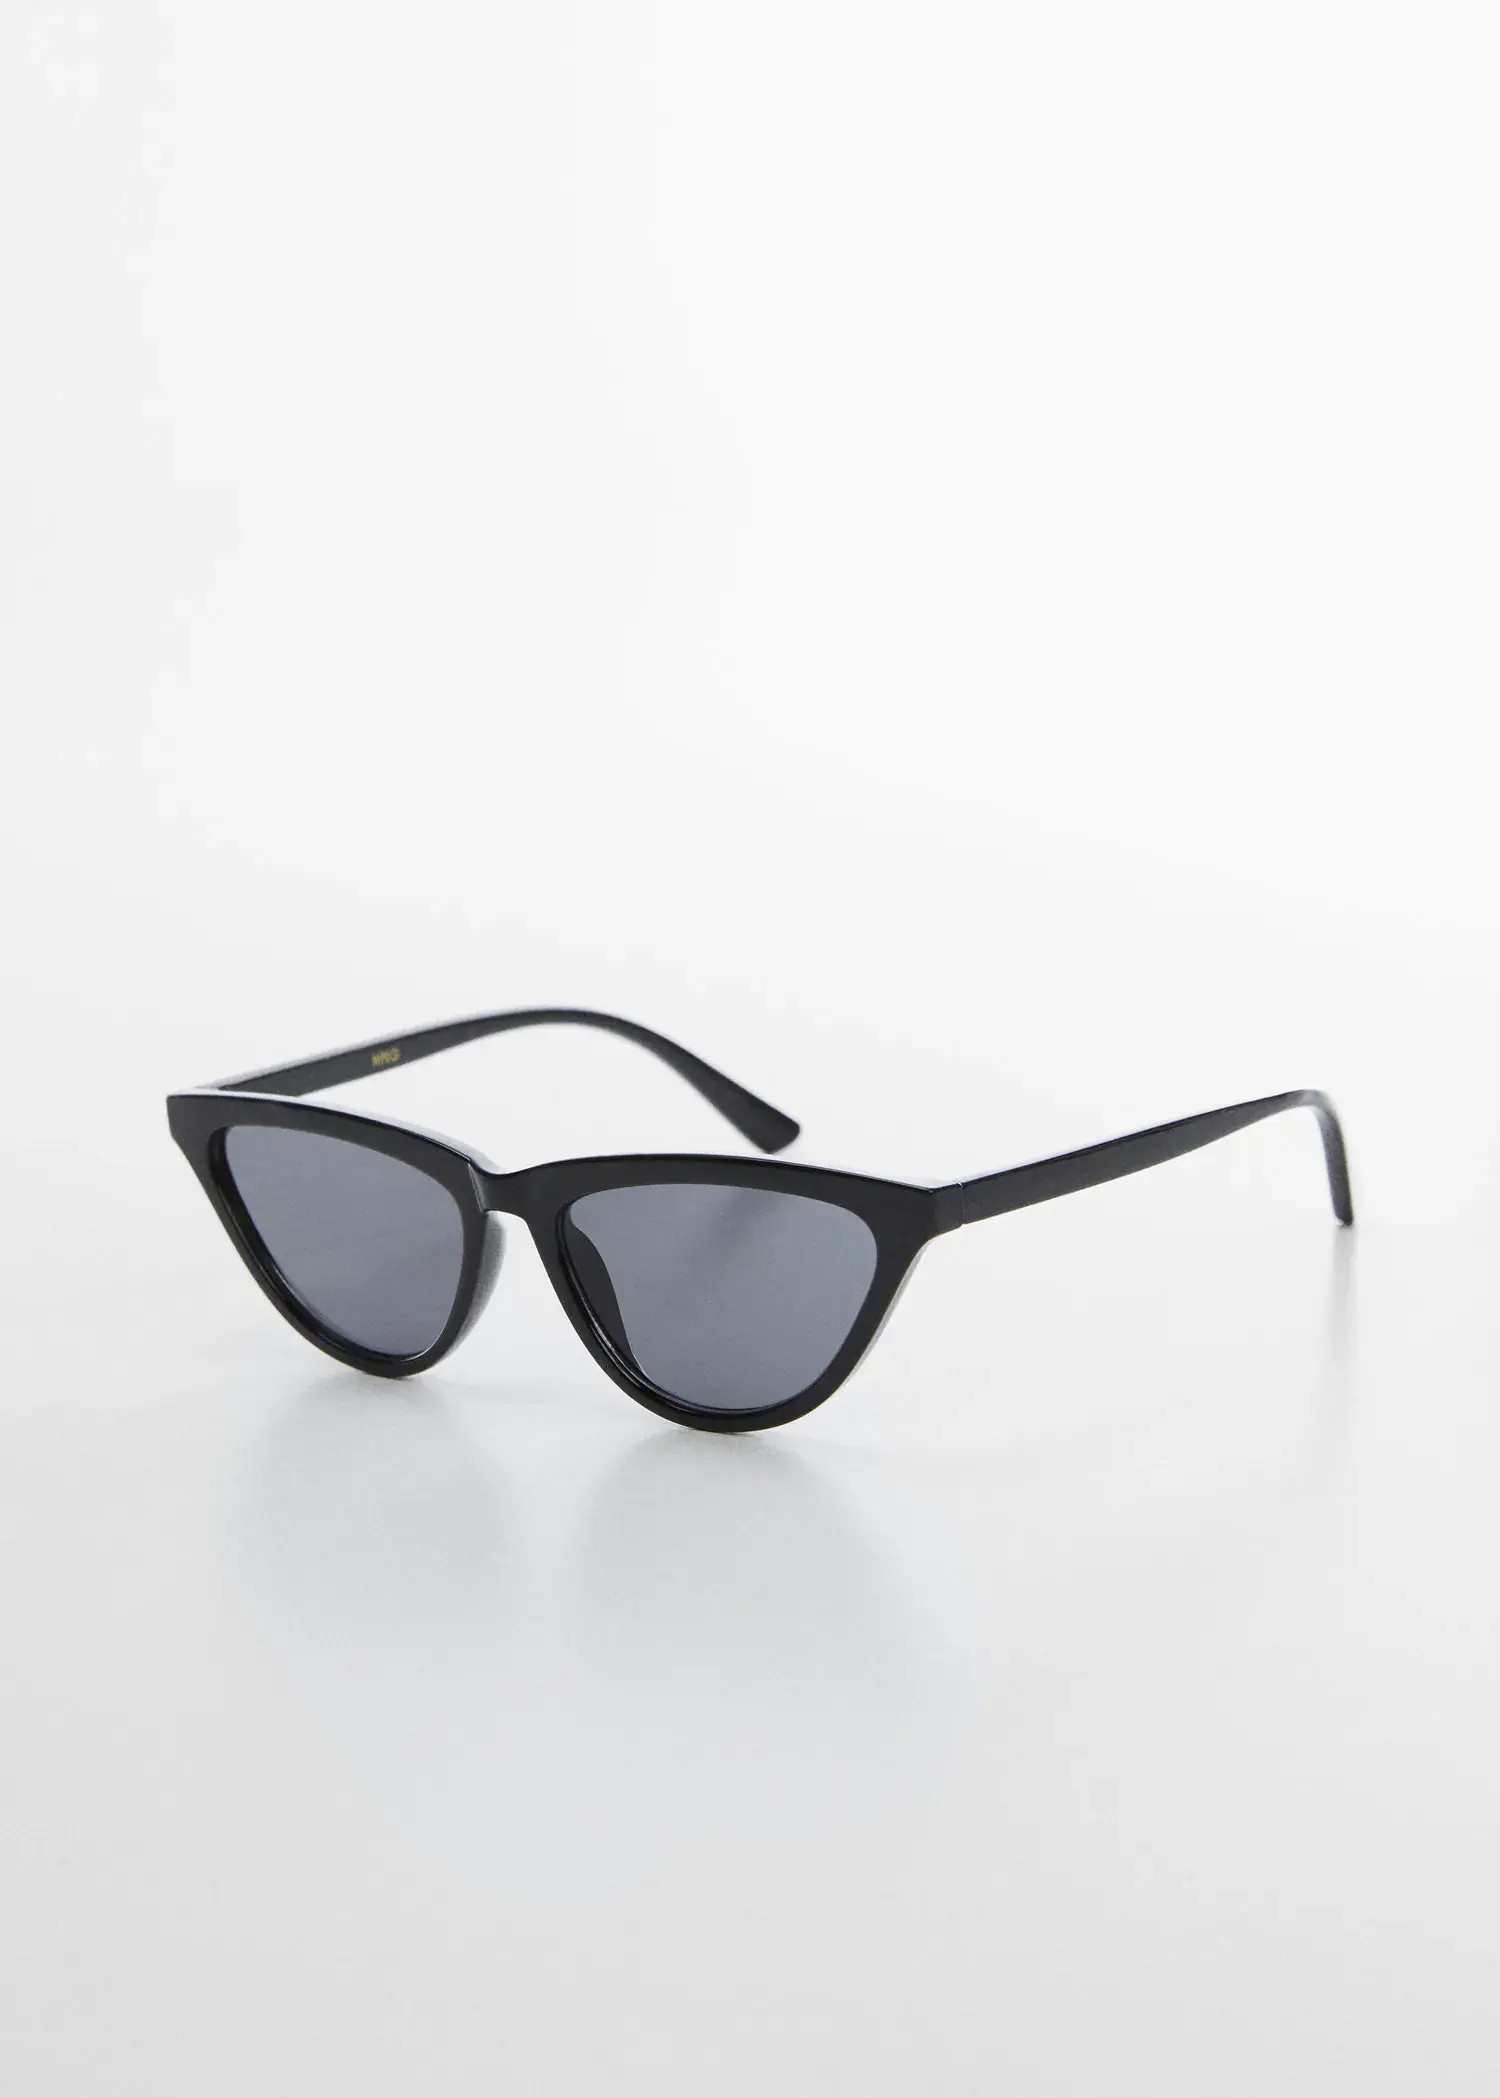 Mango Retro style sunglasses. 3